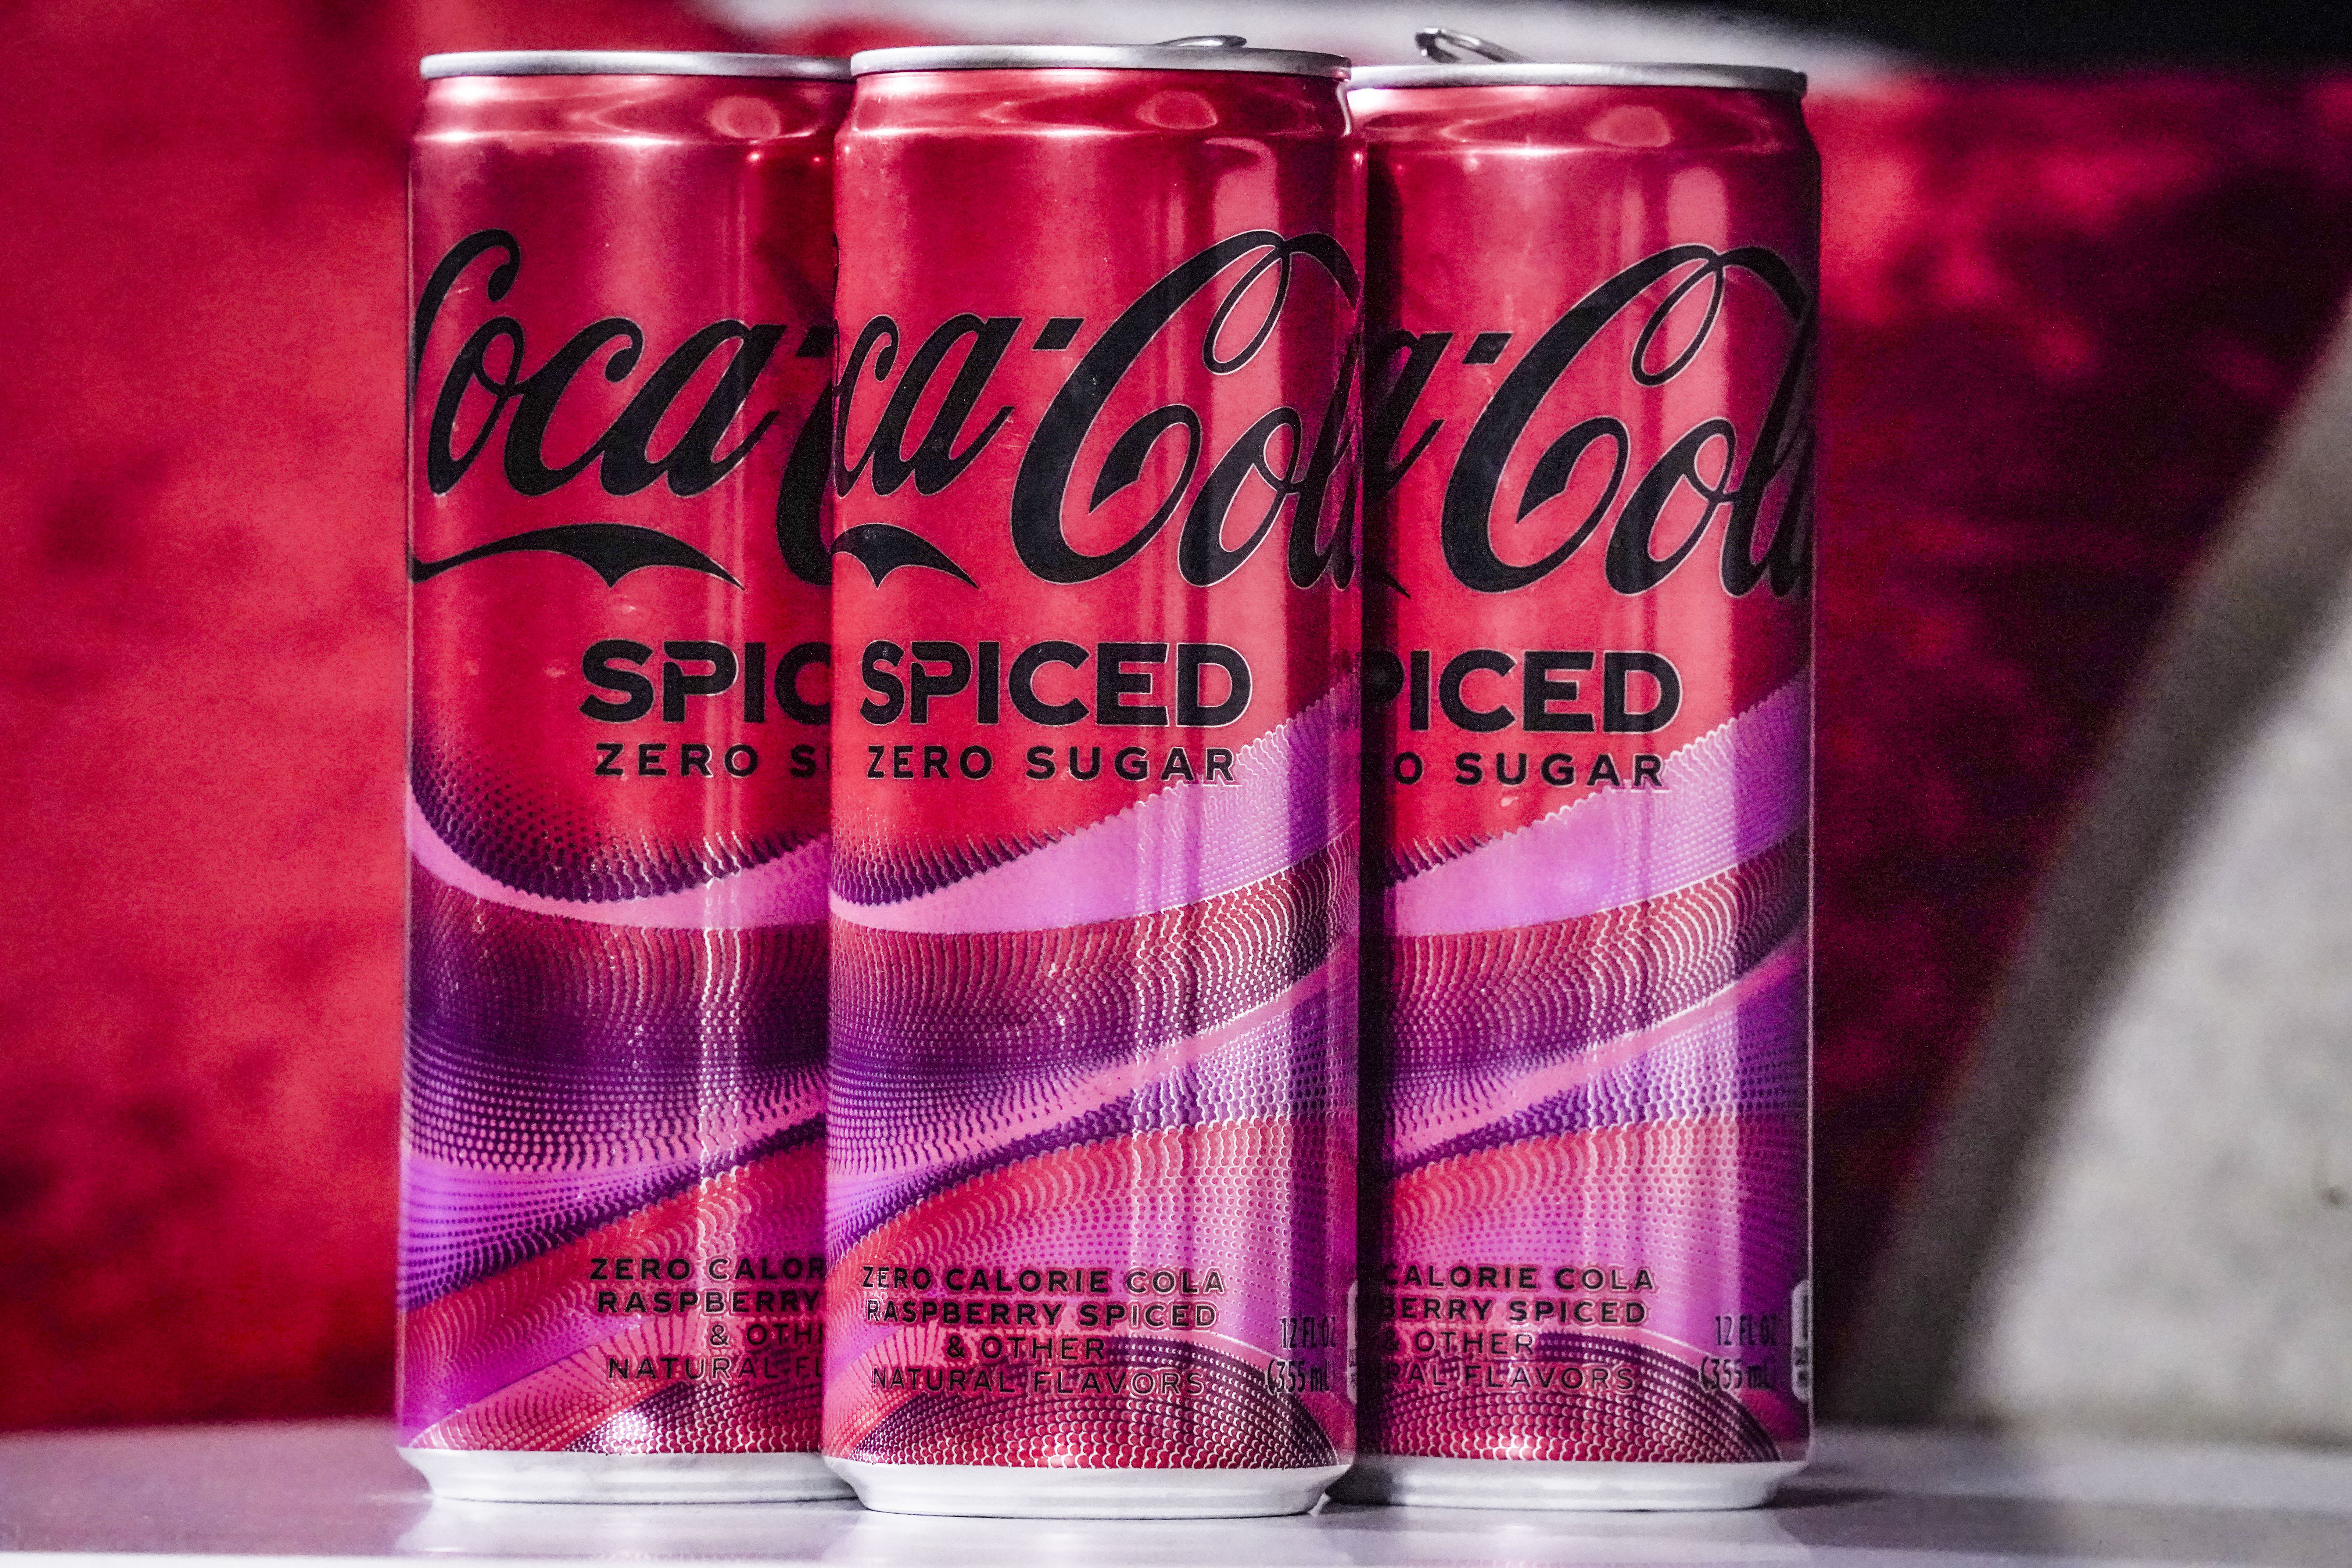 Coca-Cola Spiced: Coke unveils new permanent flavor